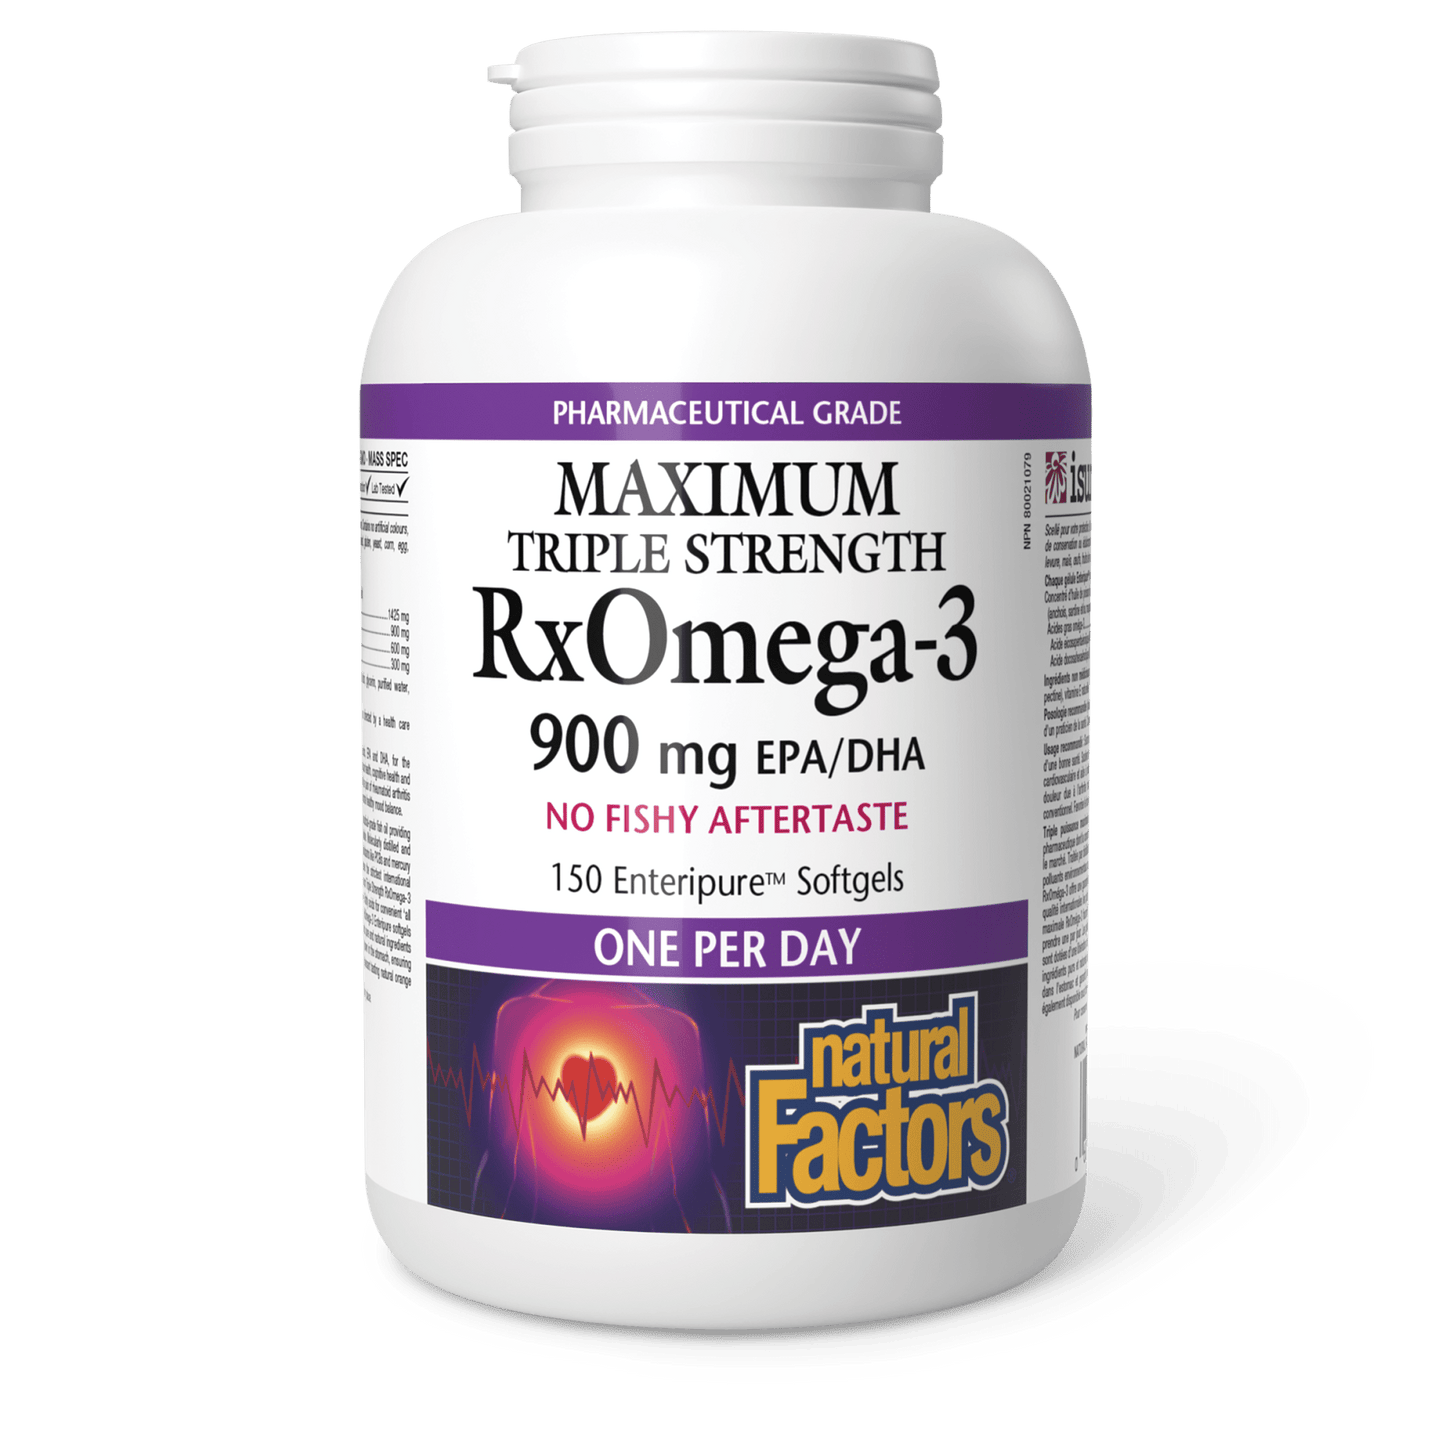 RxOmega-3 Maximum Triple Strength 900 mg, Natural Factors|v|image|35493